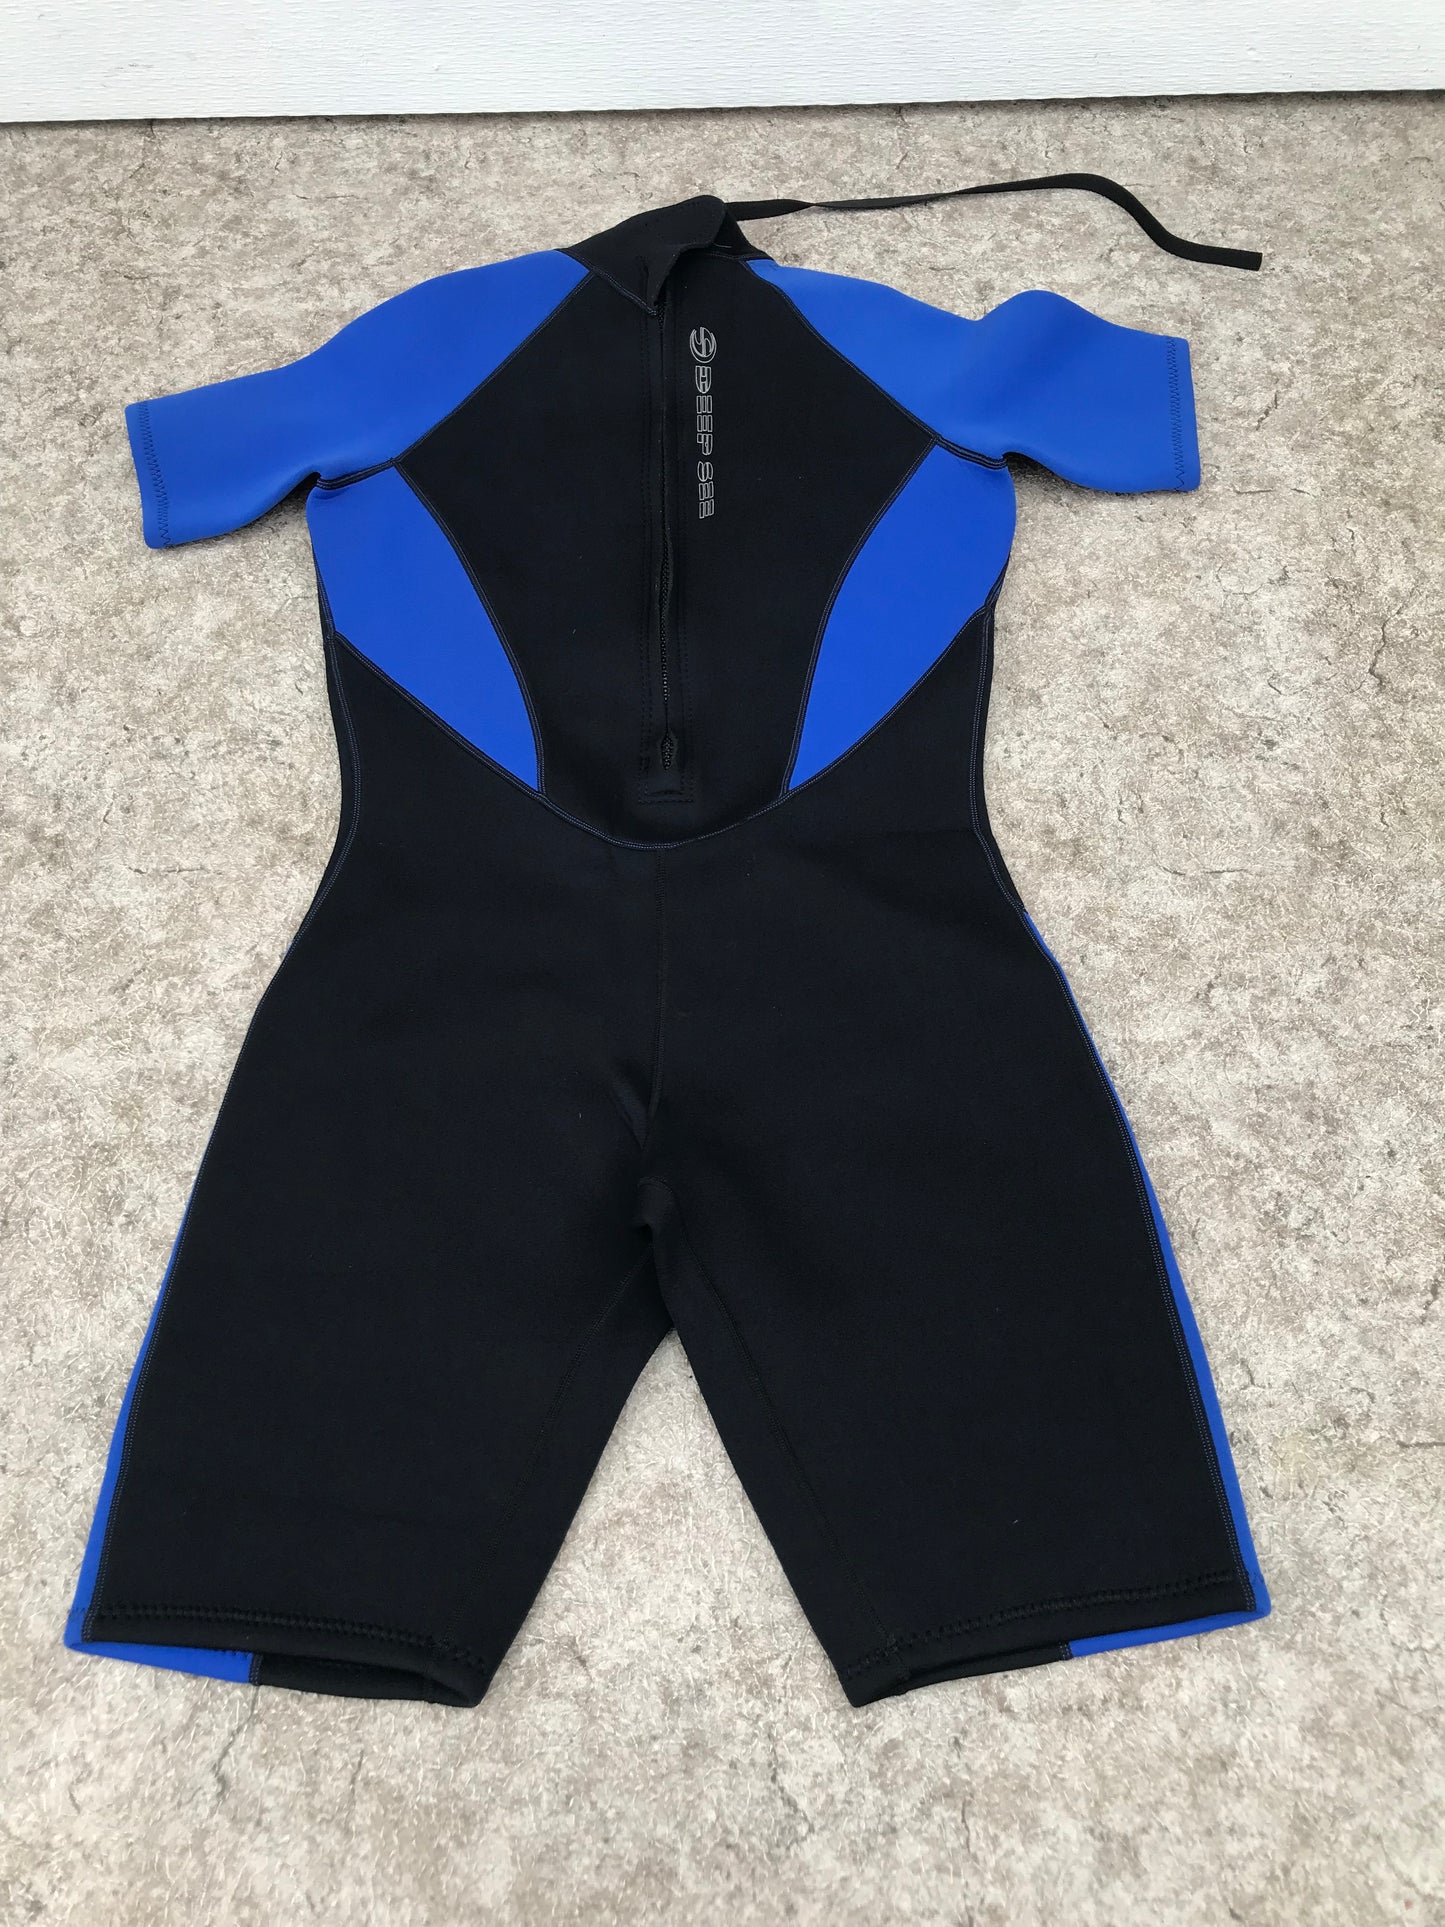 Wetsuit Ladies Size 13-14 X Large Deep Sea Blue Black  3 mm New Demo Model